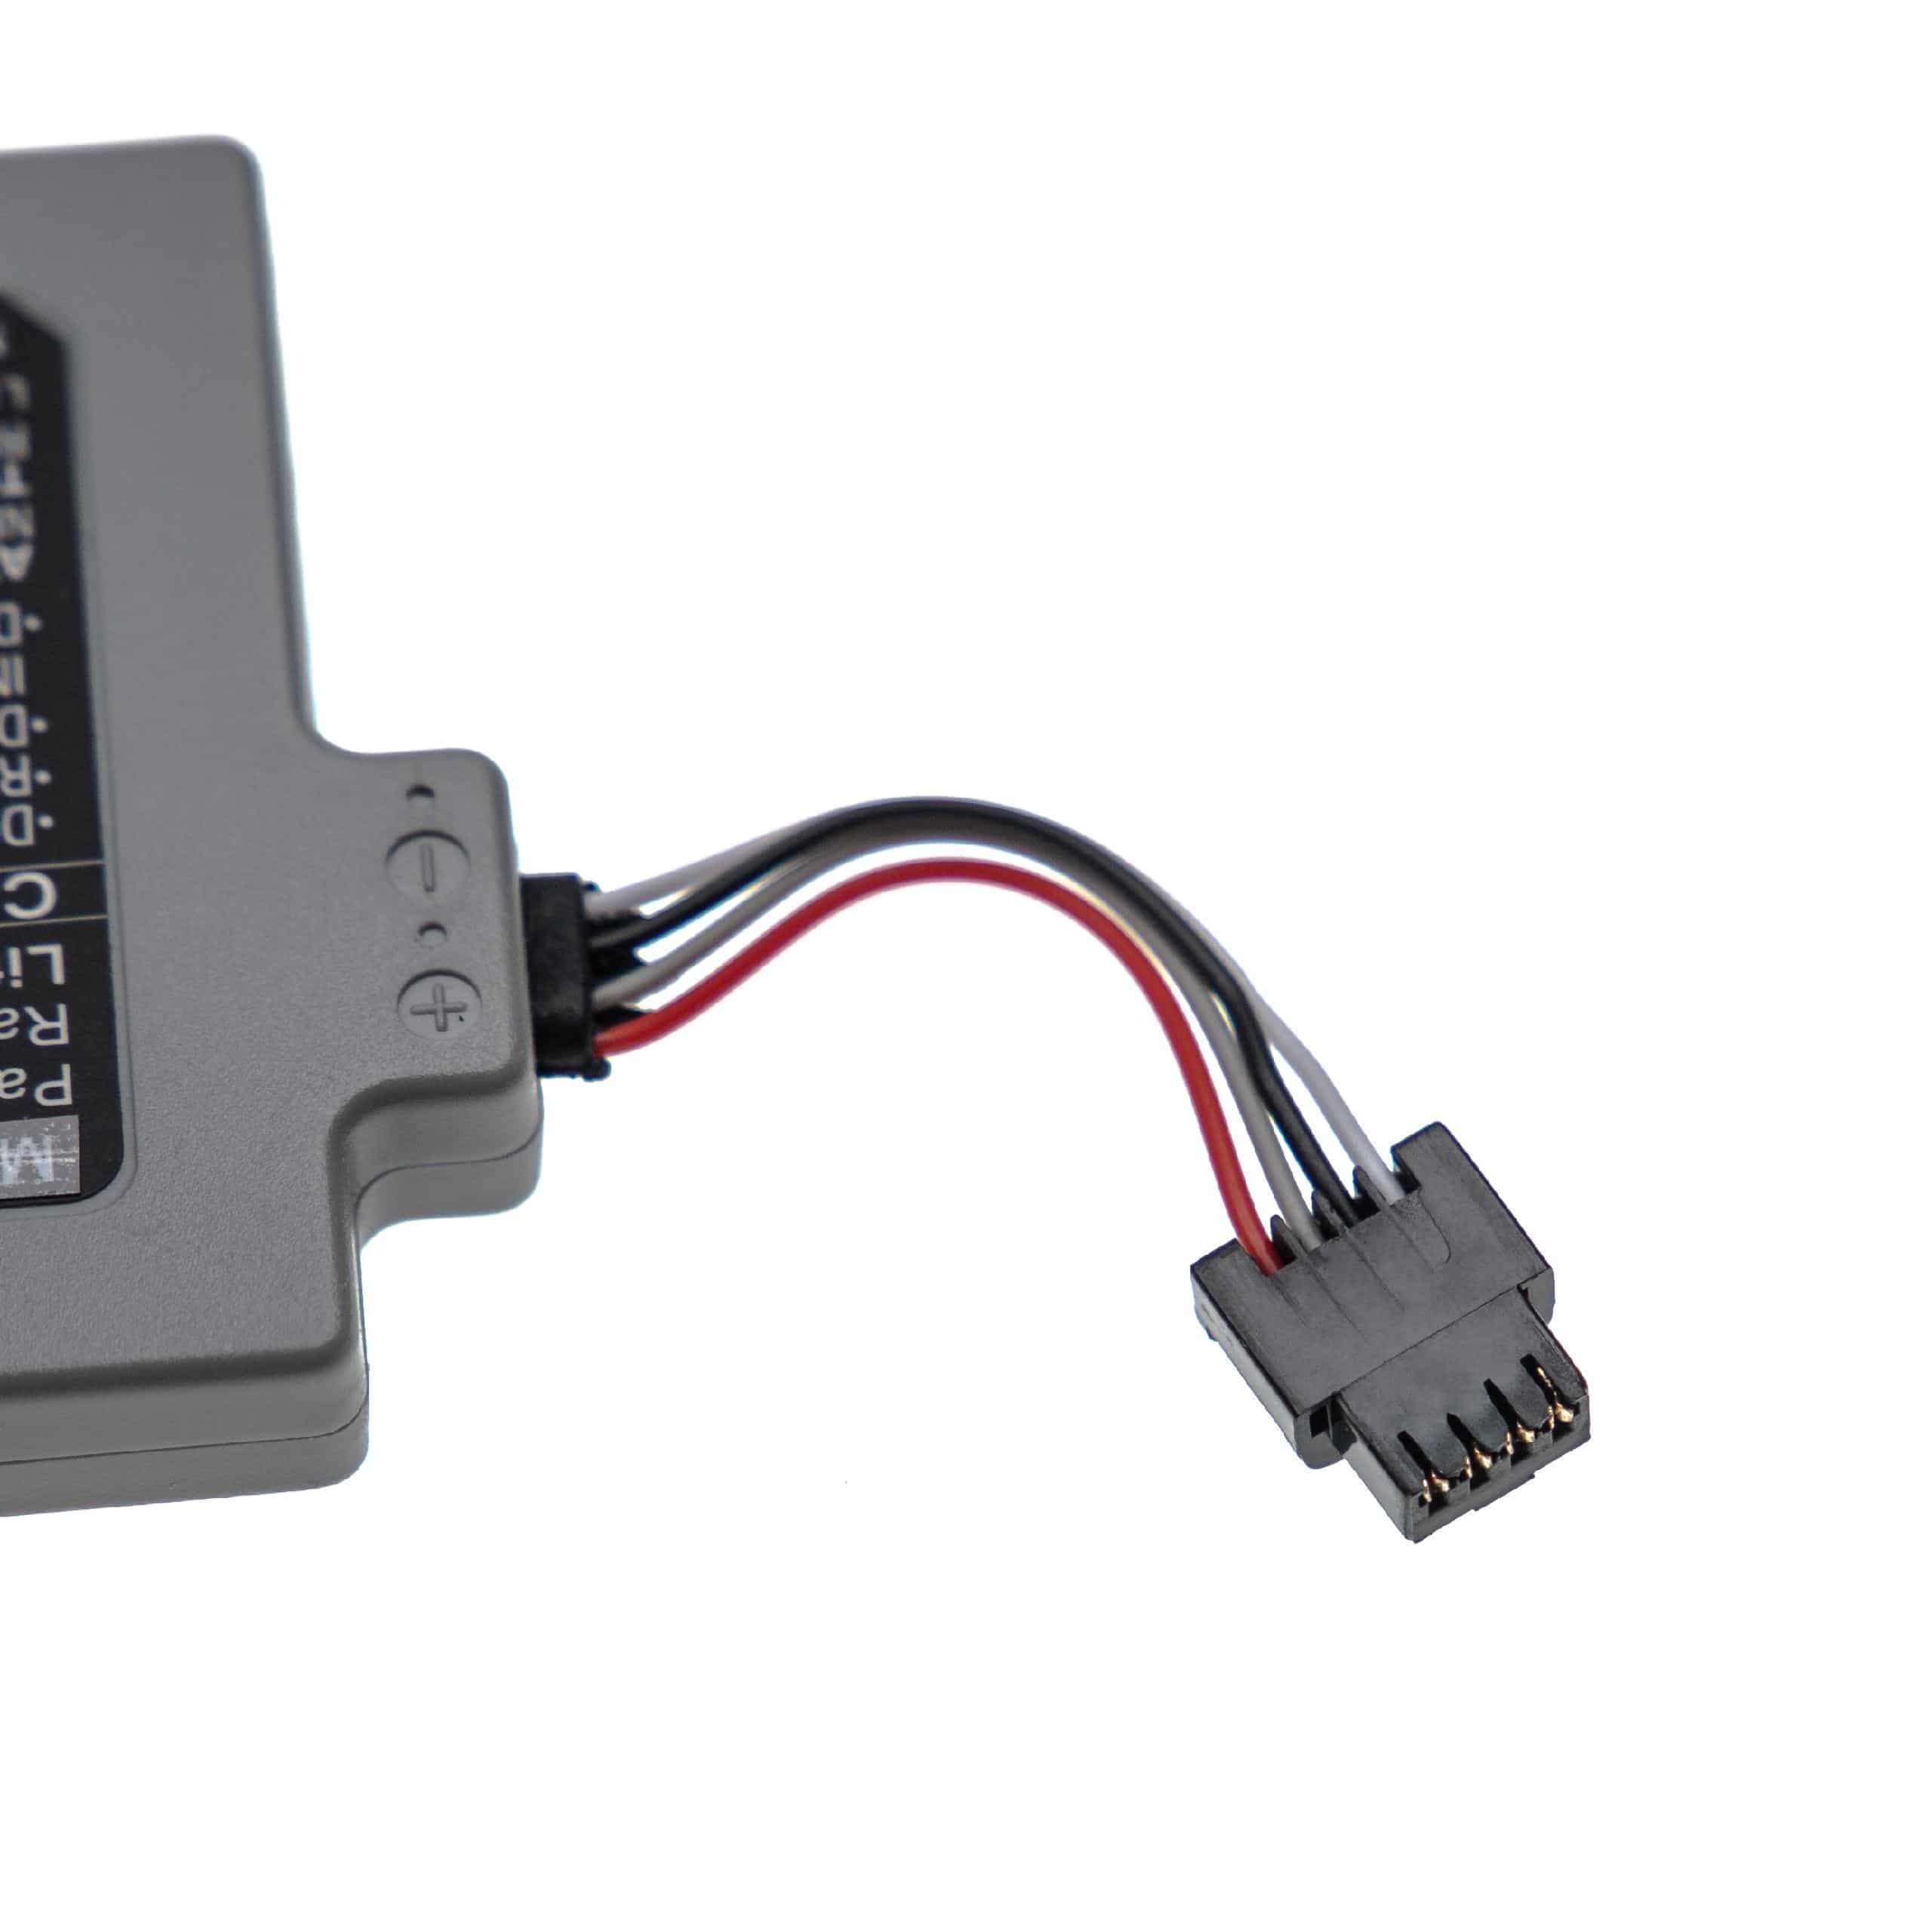  Gamepad Controller replaces Nintendo WUP-013 for Nintendo - 2450mAh, 3.7V